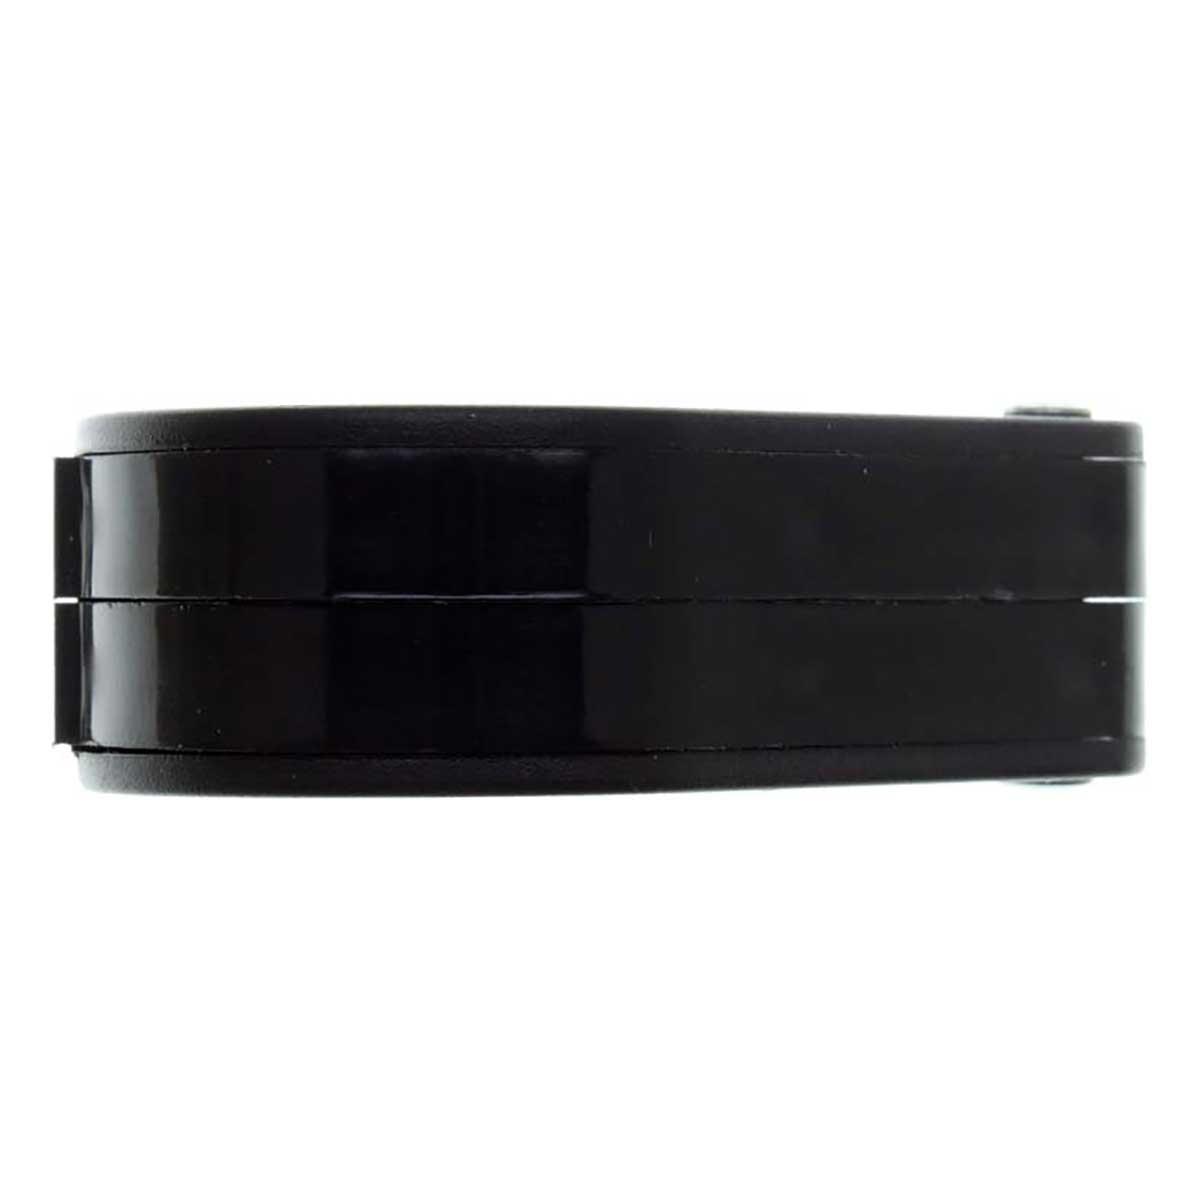 25.4mm - 1 inch 7.5x - 7.5x Folding Magnifier Glass Lens